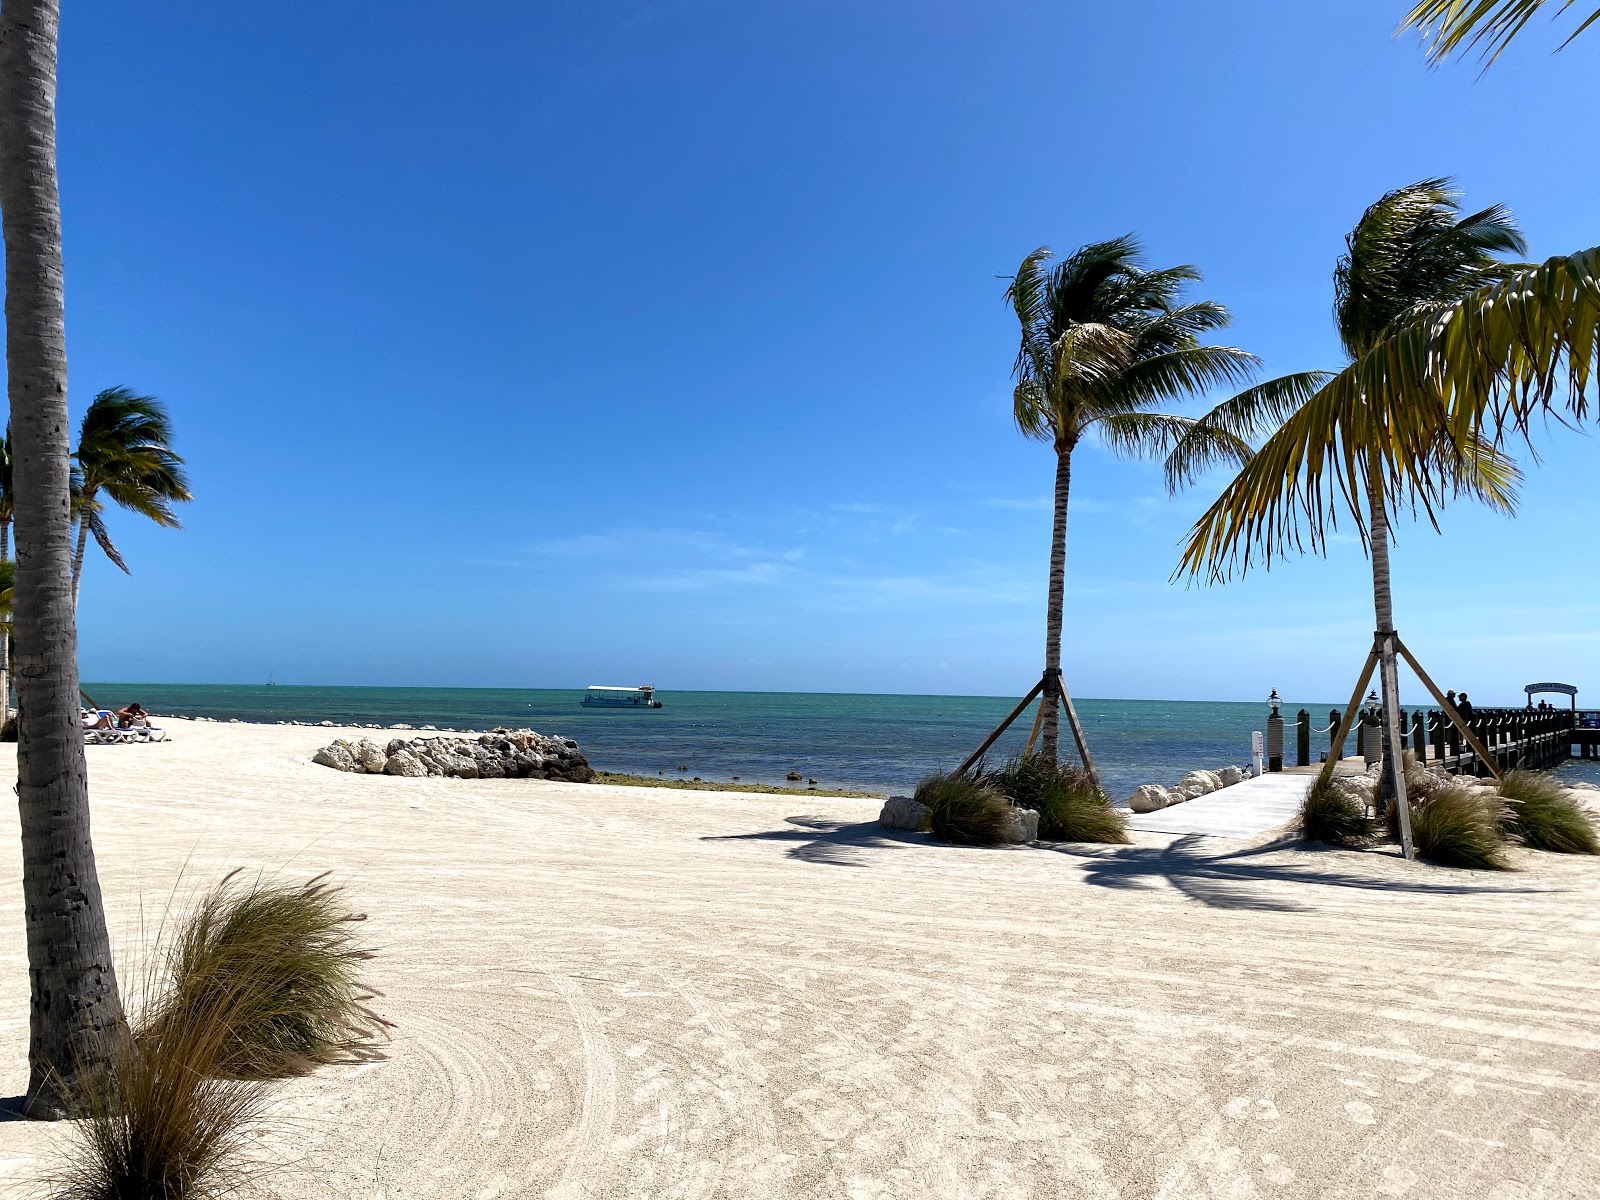 Foto de Islander beach - lugar popular entre os apreciadores de relaxamento